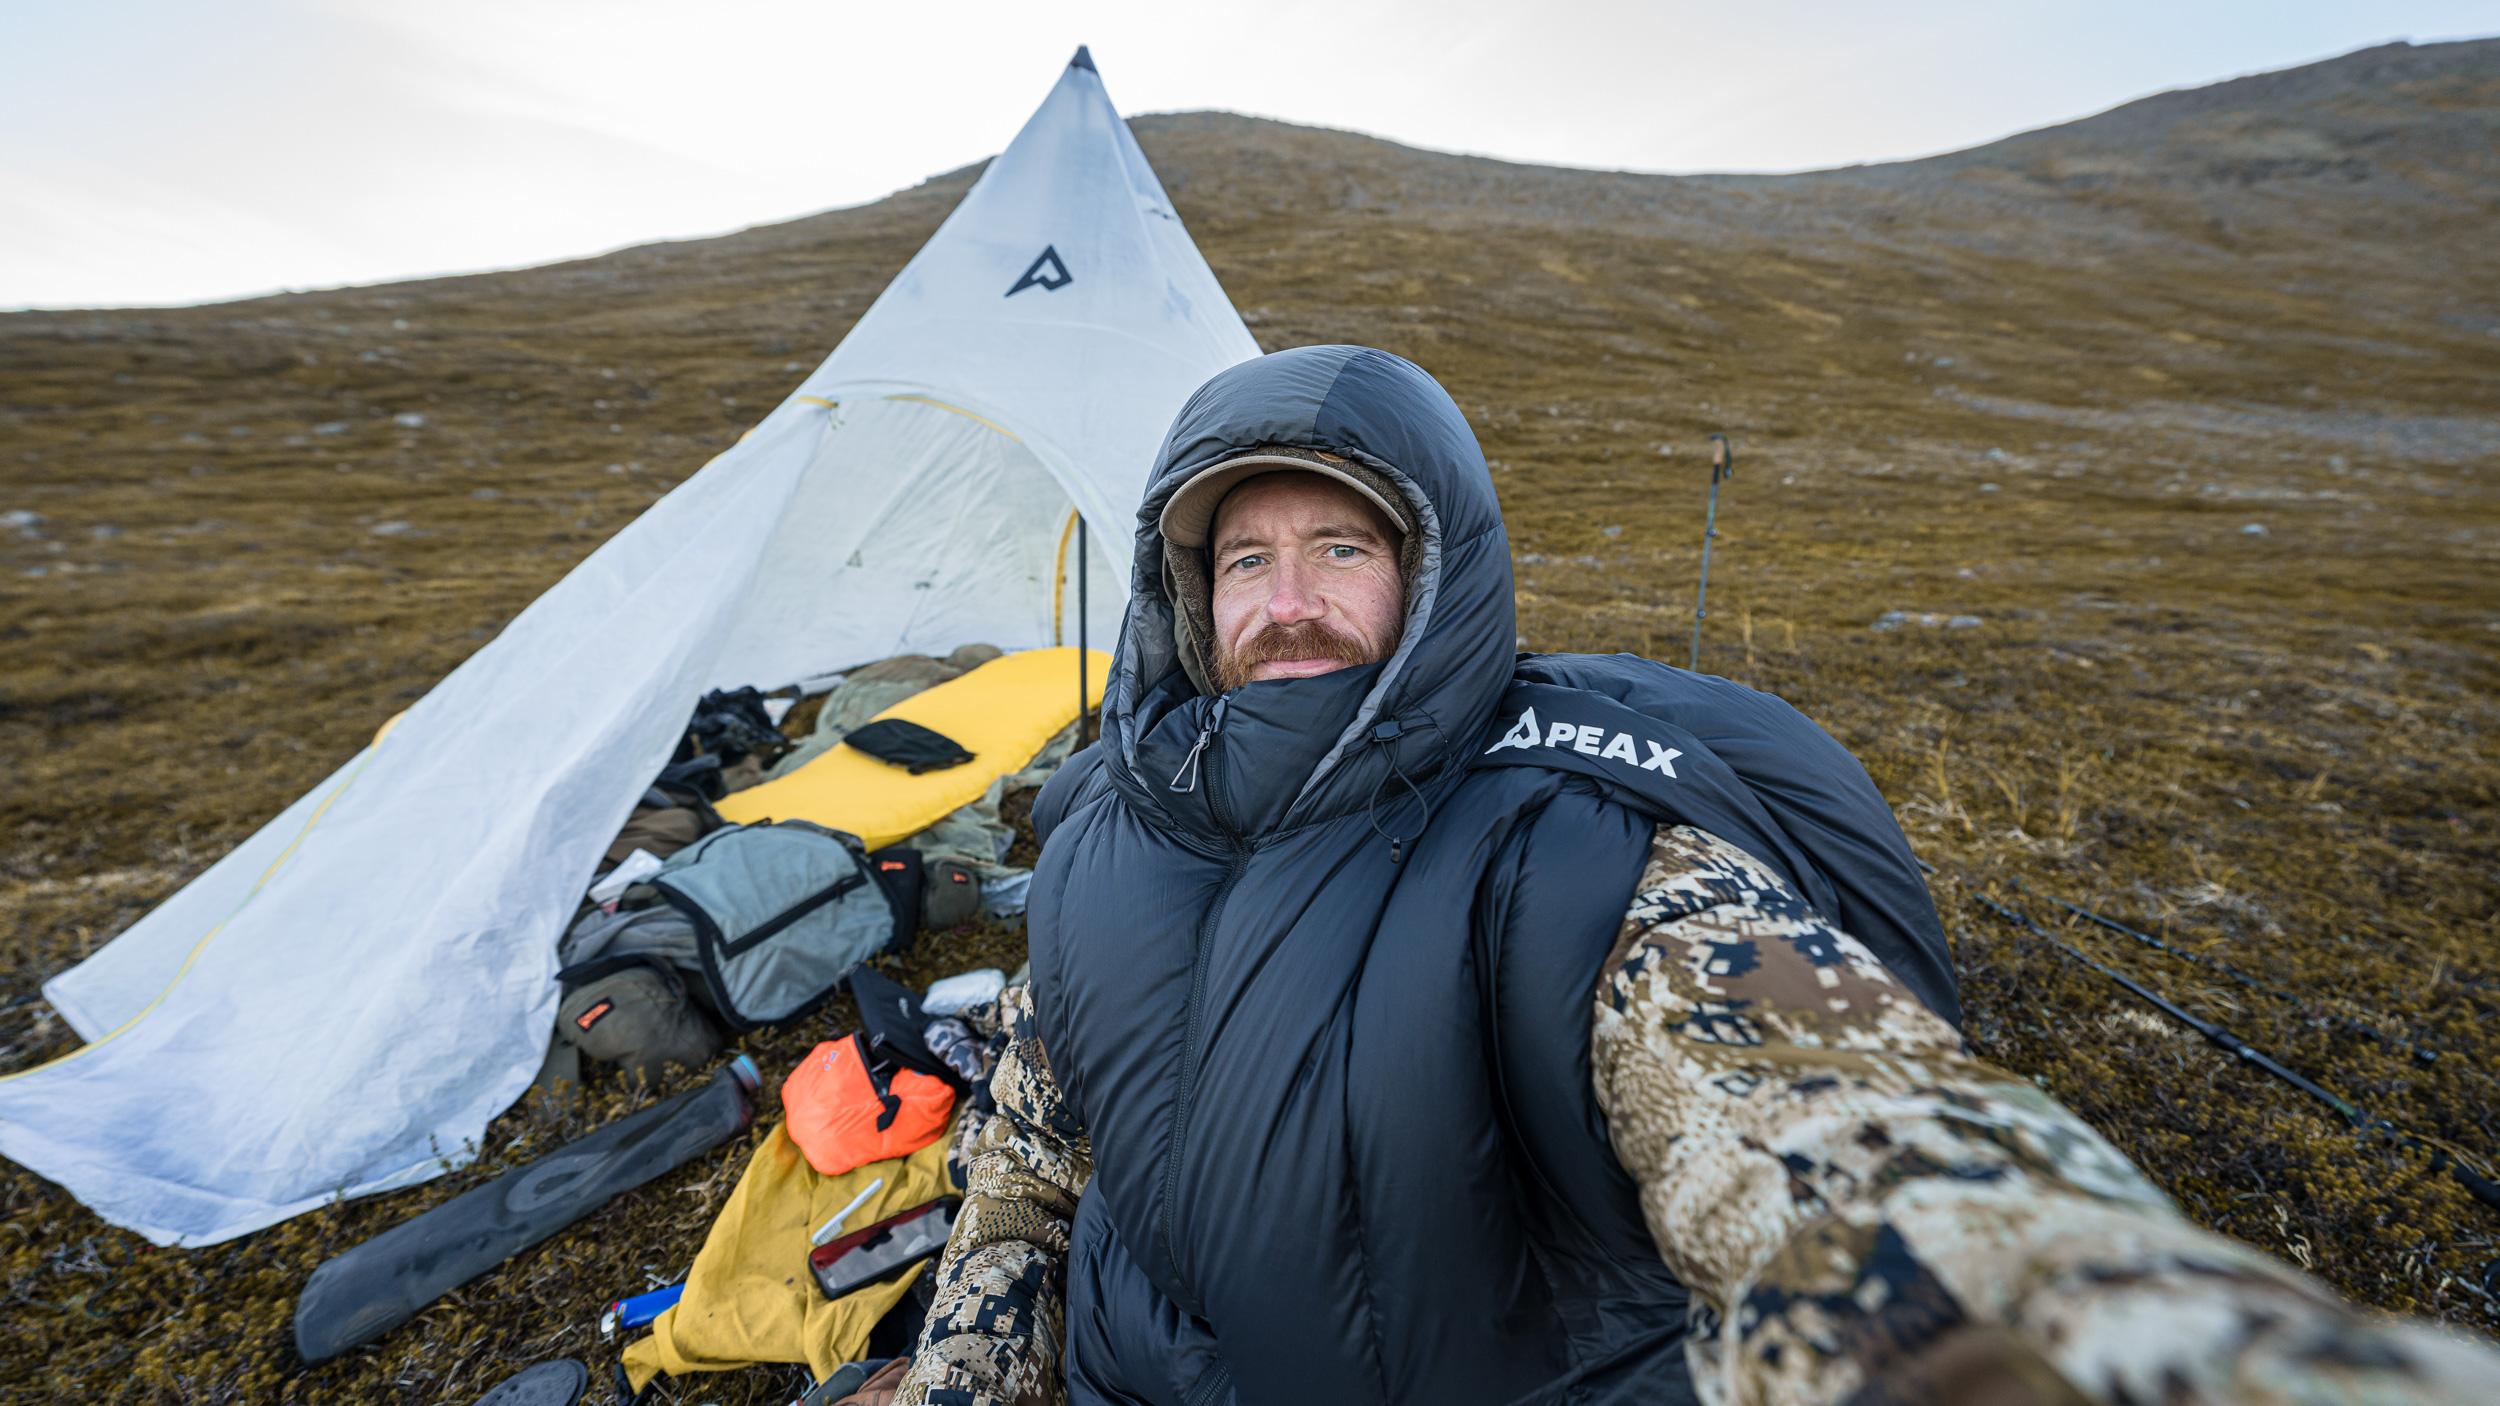 Brady Miller using PEAX SOLACE 15 degree sleeping bag on a mountain hunt